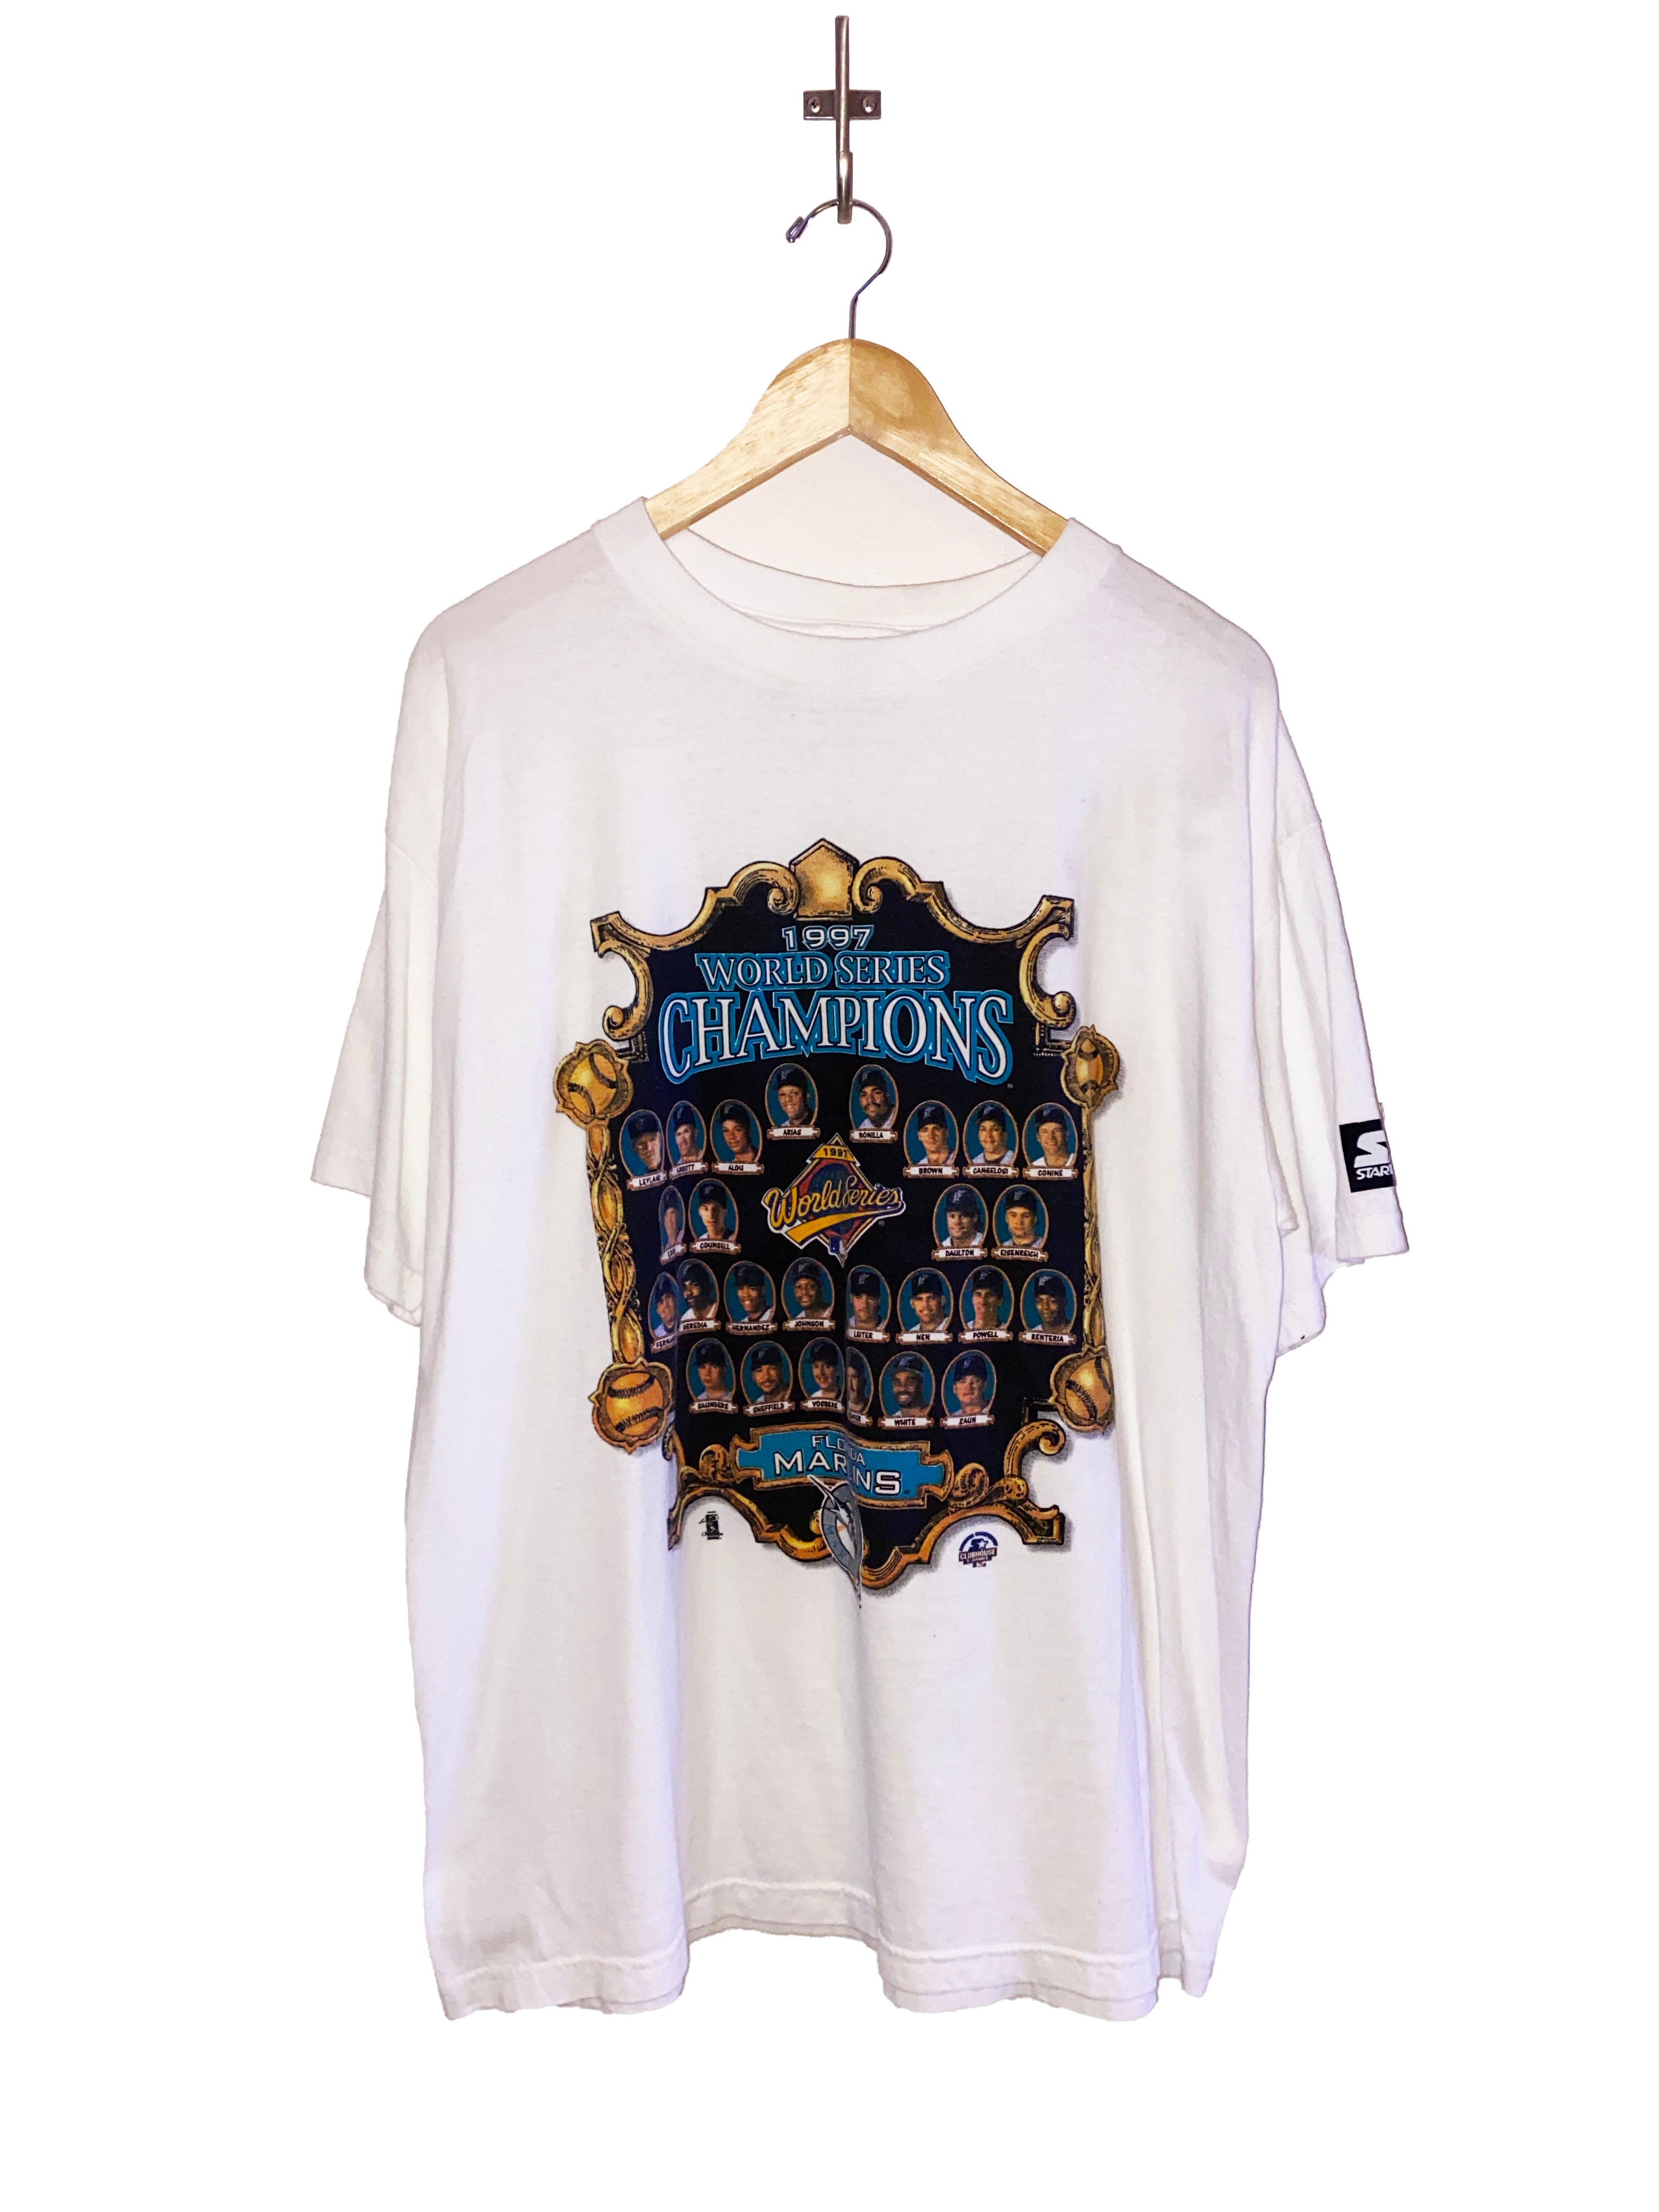 Vintage 1997 Florida Marlins World Series Champions Crewneck T Shirt Size XL